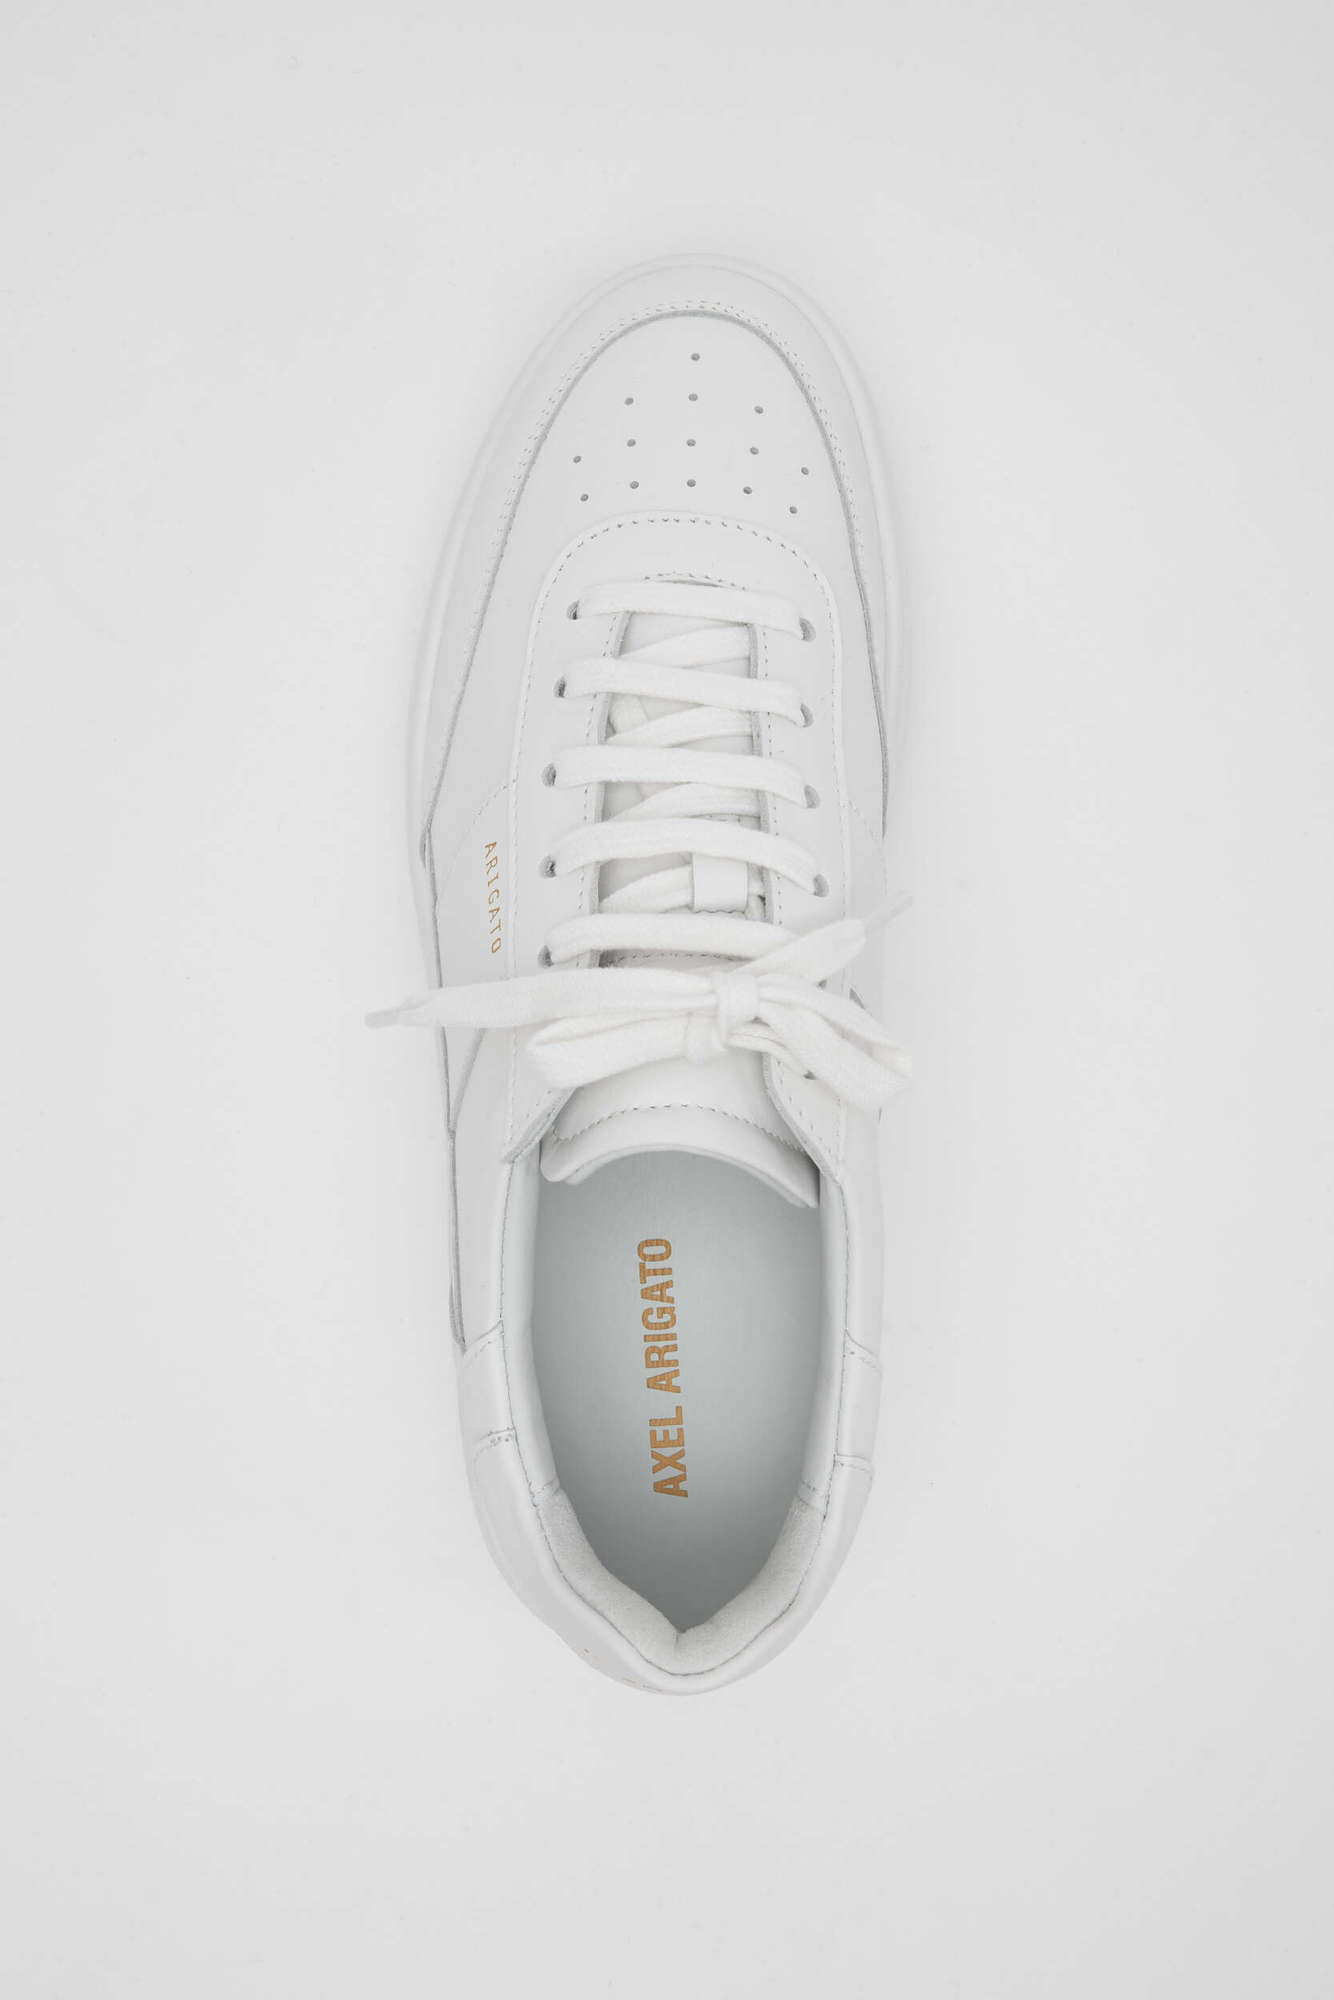 AXEL ARIGATO Orbit Vintage Sneaker in White